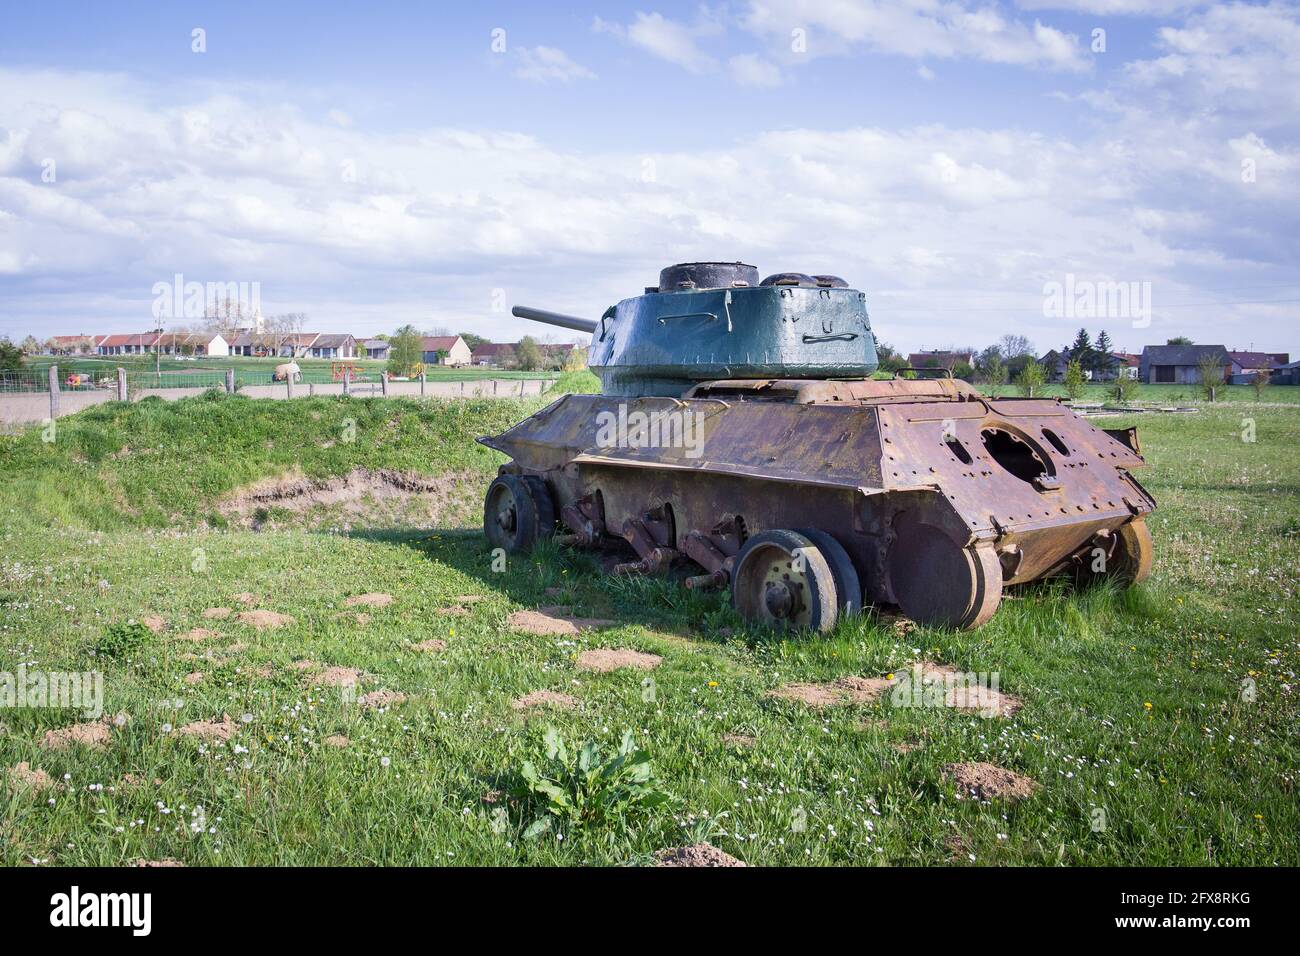 Abandoned tank from World War II Stock Photo